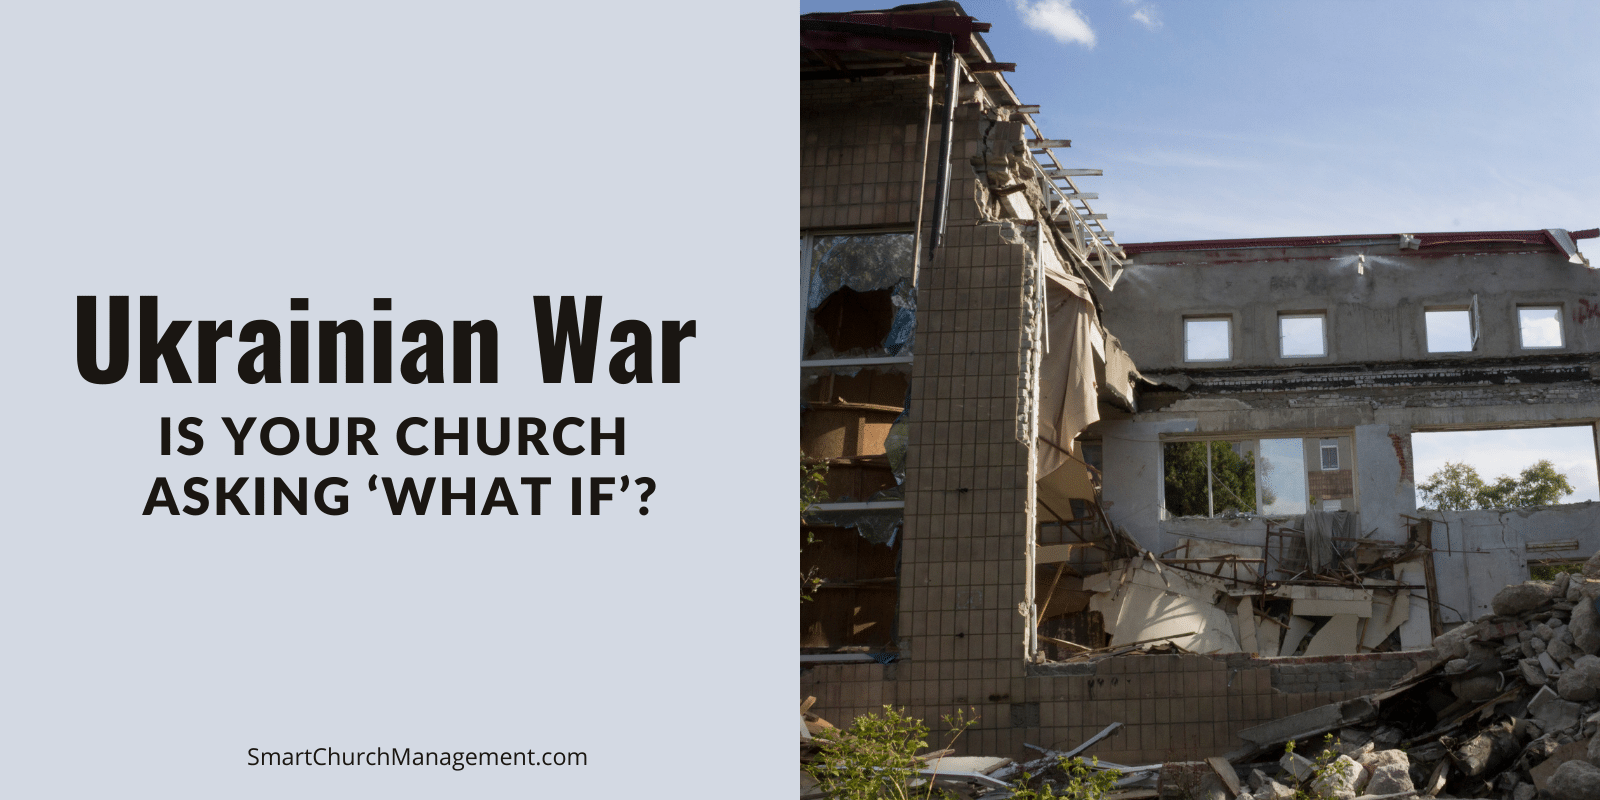 Ukranian war and the church